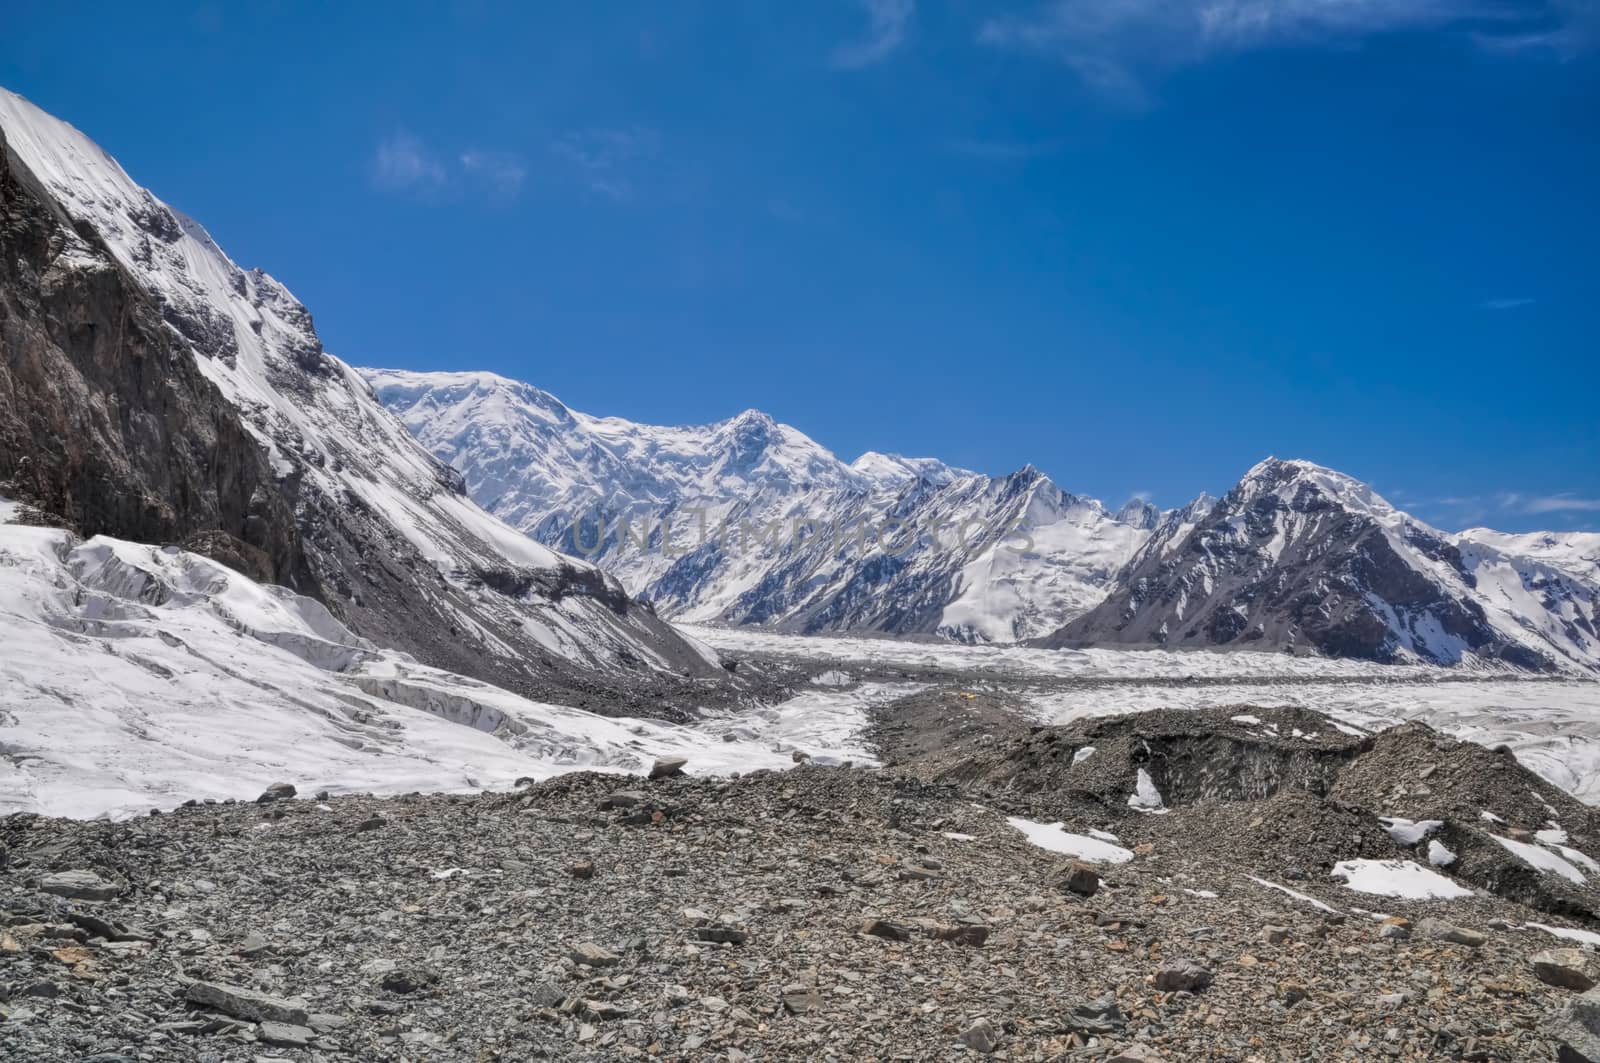 Picturesque landscape on Engilchek glacier in Tian Shan mountain range in Kyrgyzstan